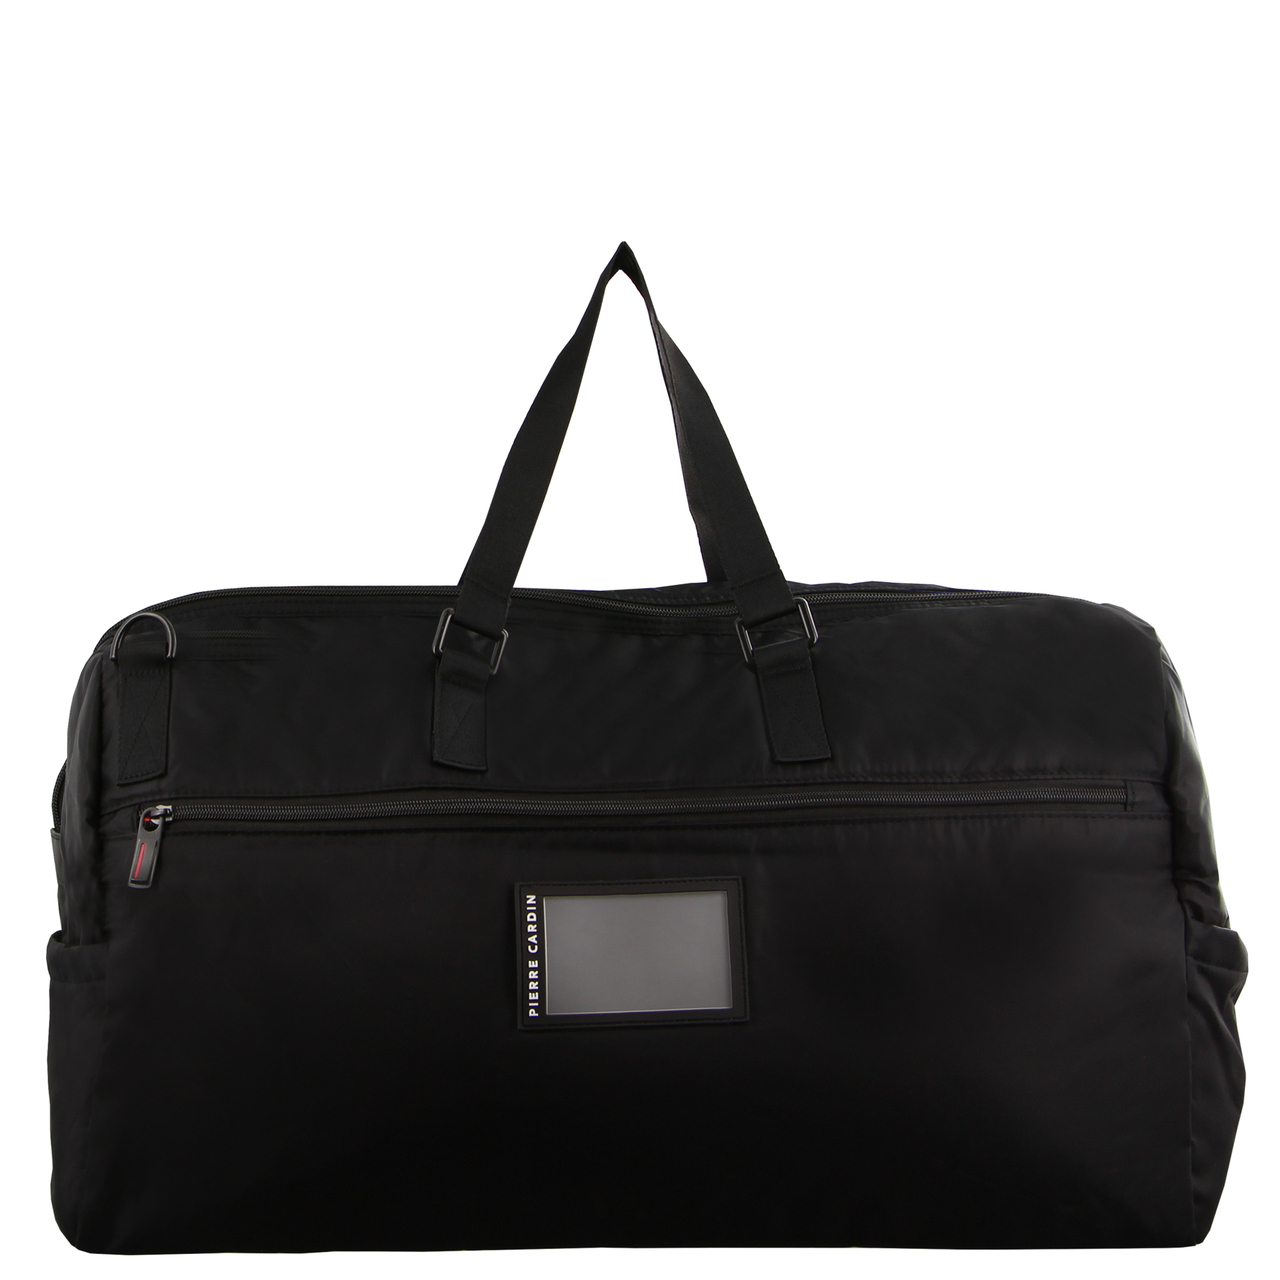 Pierre Cardin Travel Duffle Bag - Black